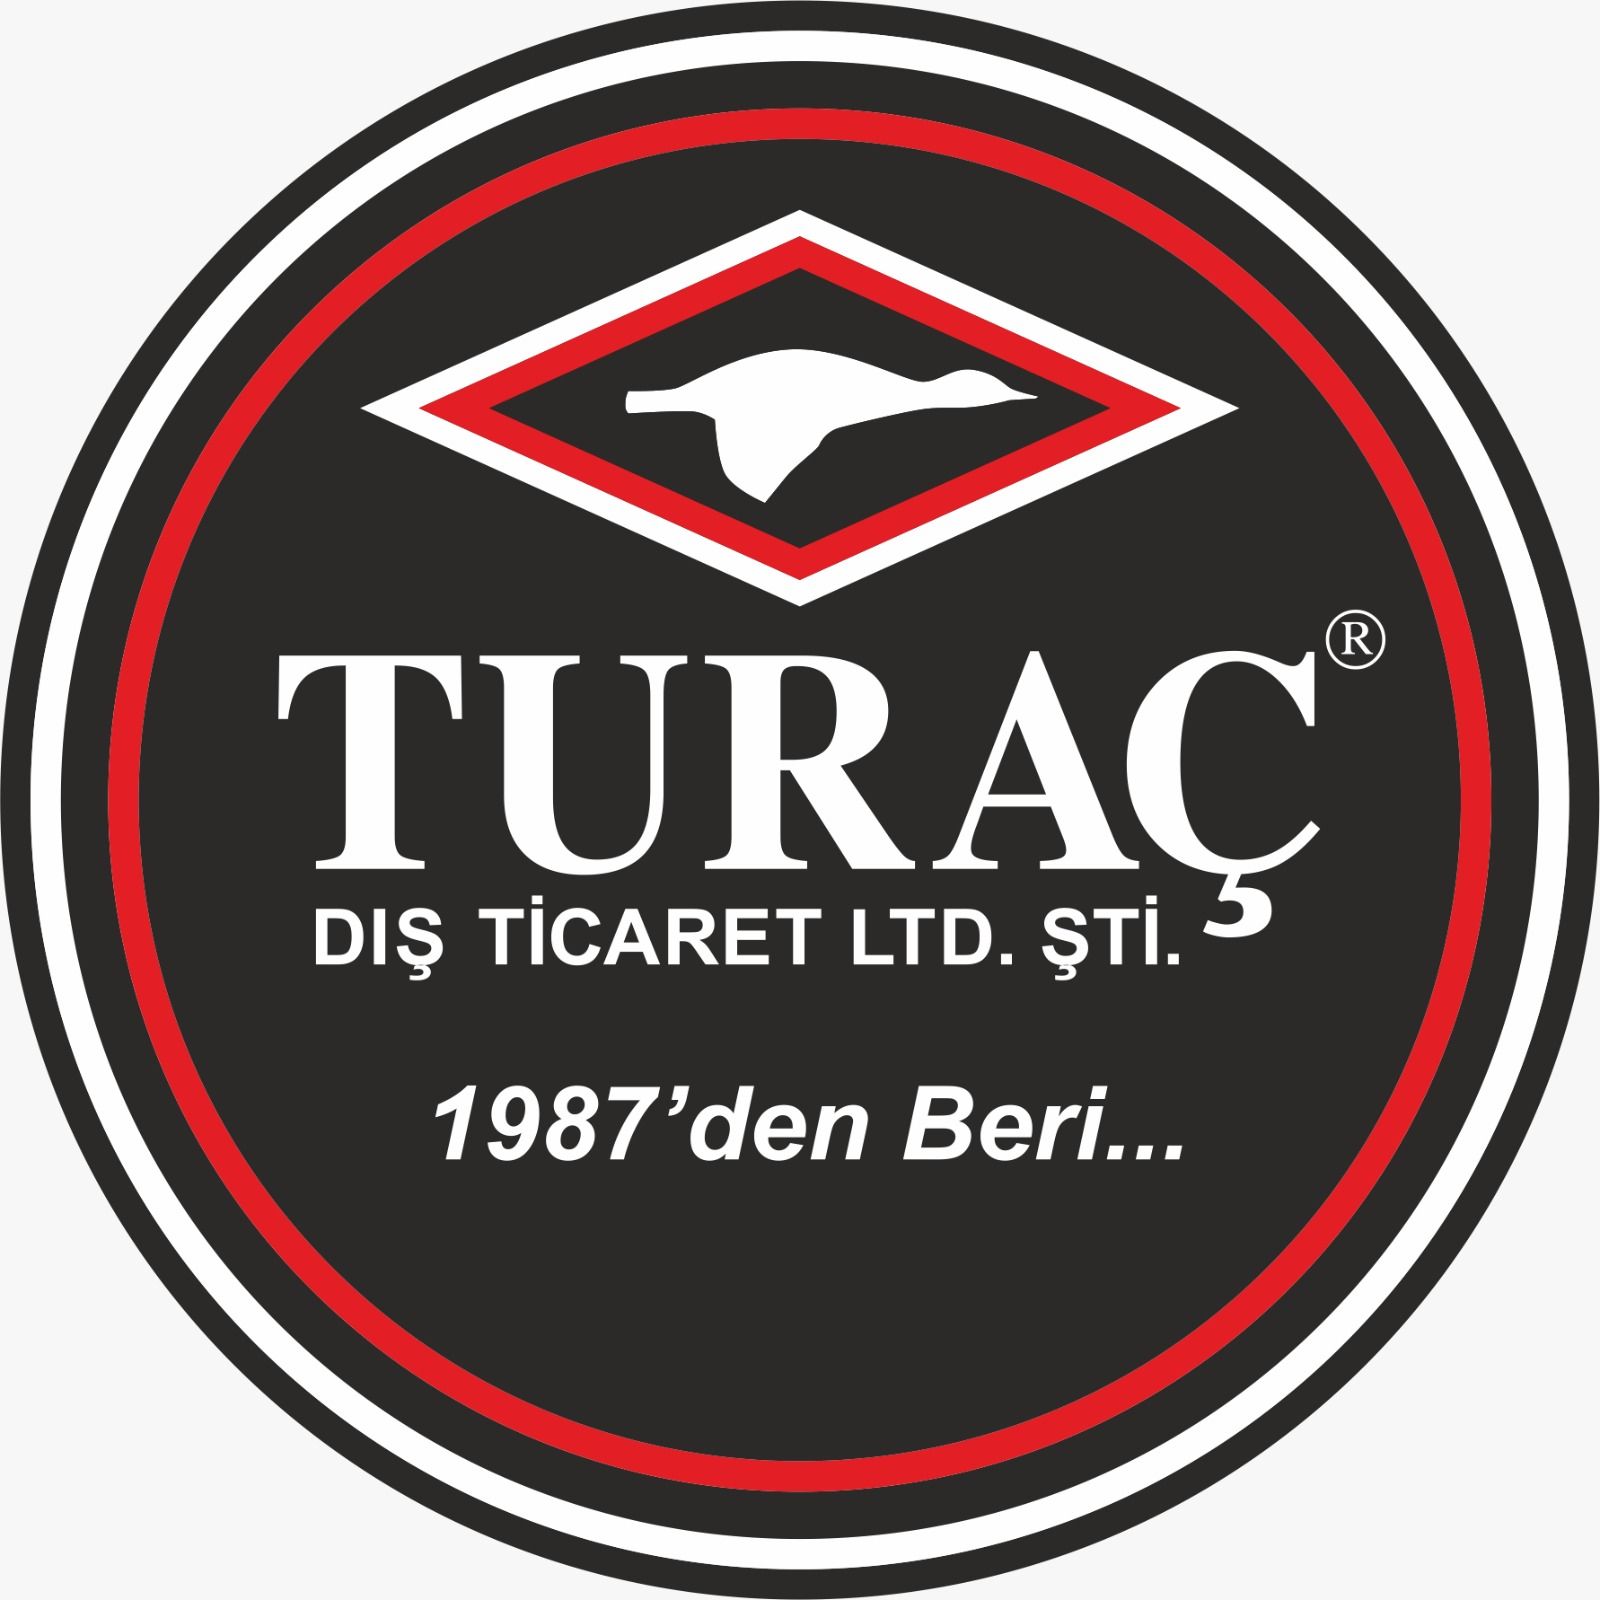 TURAC DIS TICARET LTD STI